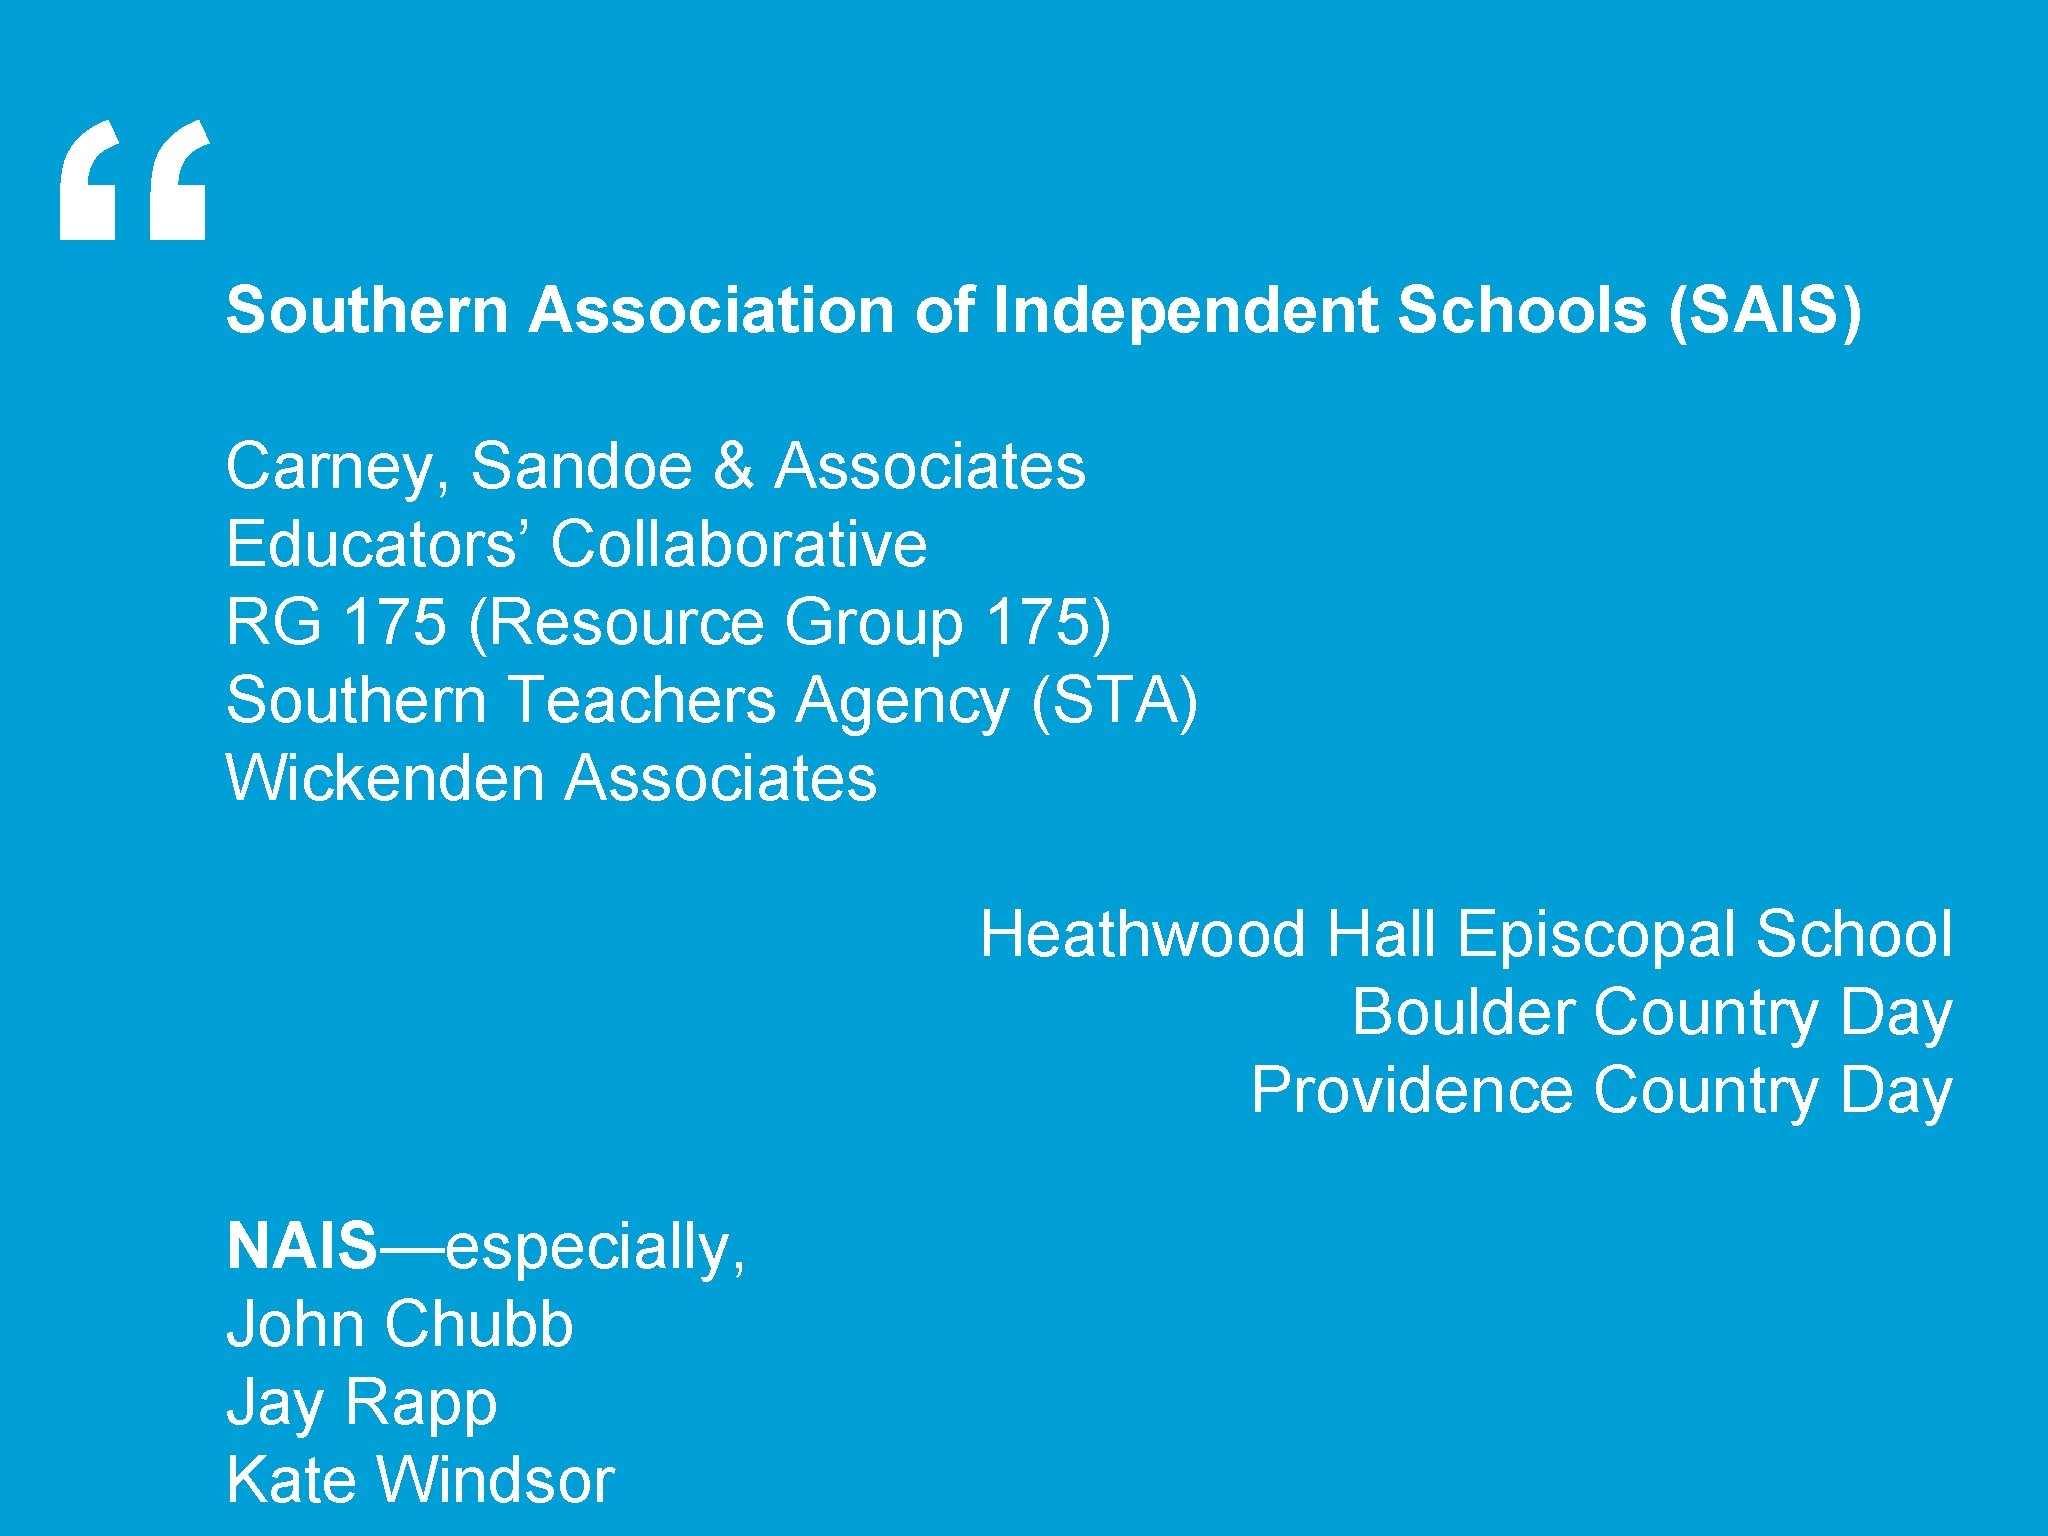 “ Southern Association of Independent Schools (SAIS) Carney, Sandoe & Associates Educators’ Collaborative RG